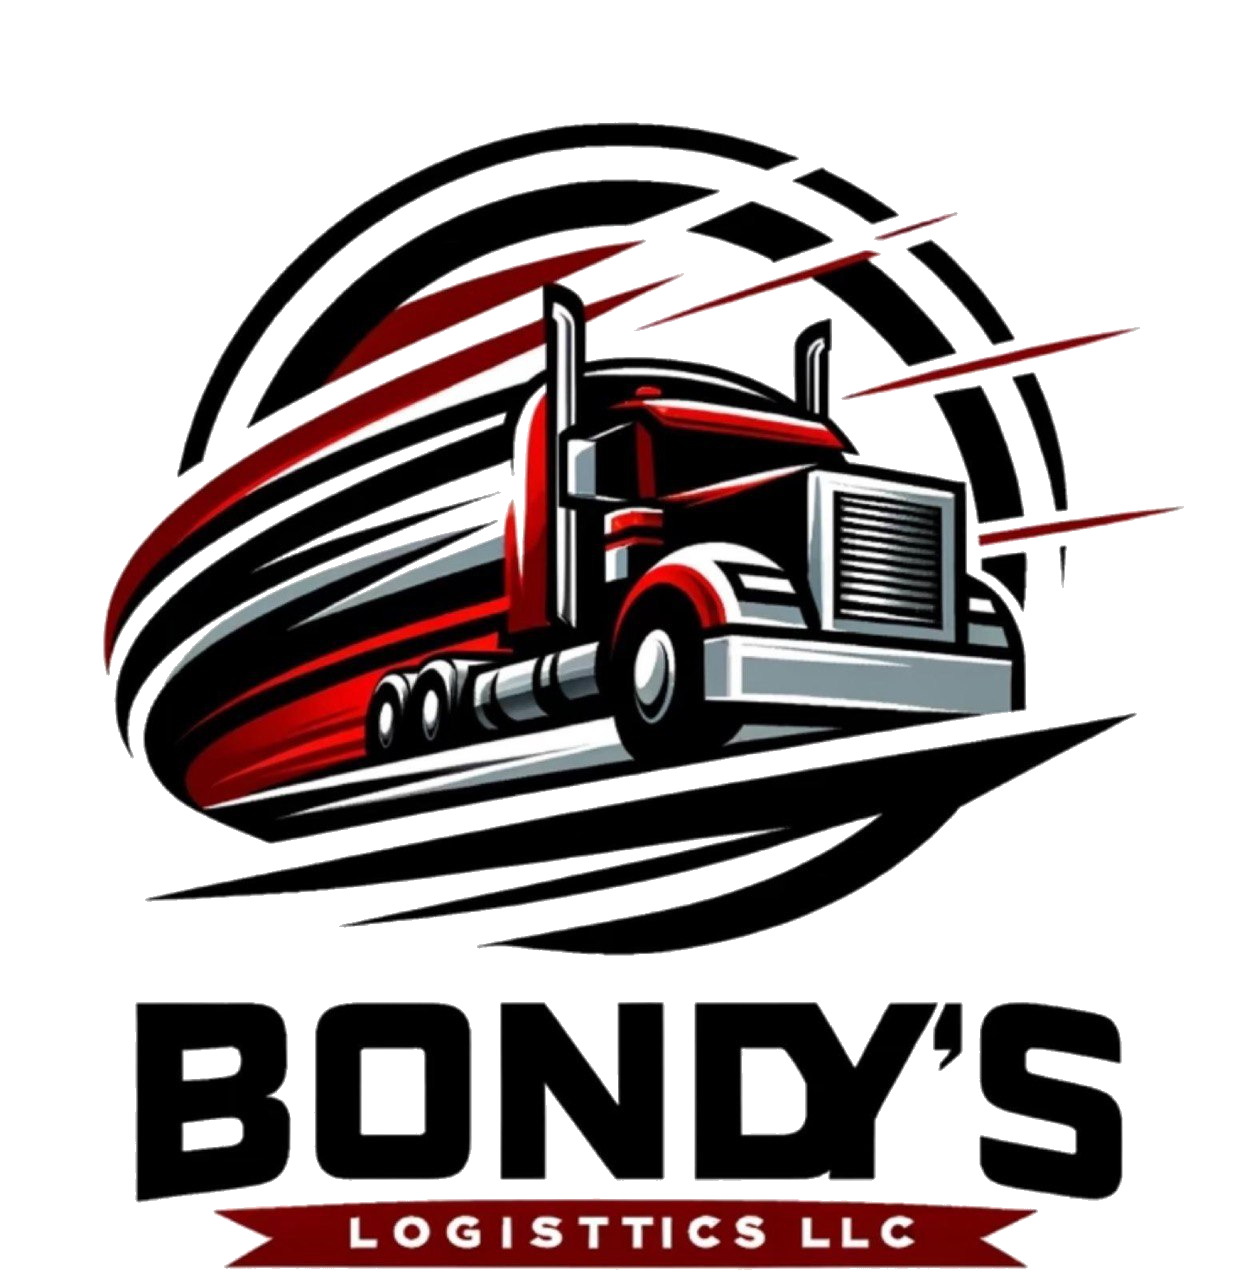 BONDY'S LOGISTICS LLC